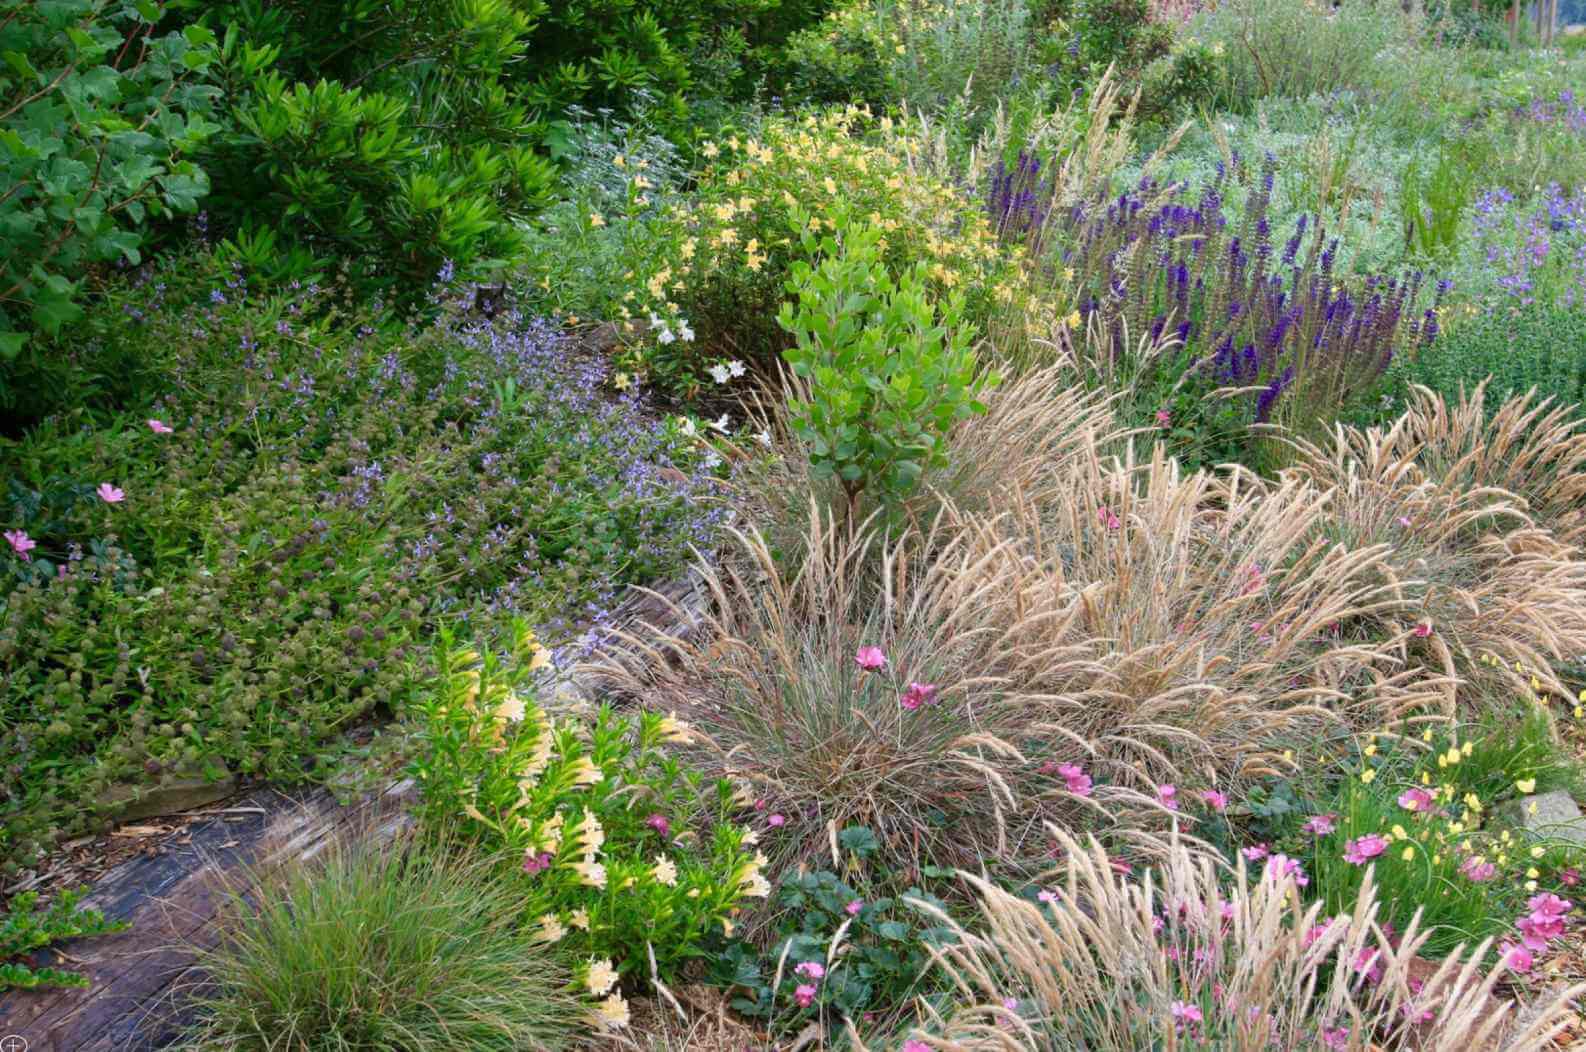 Plants intertwining give the garden a meadow-like quality (Photo © Suzi Katz Garden Design)